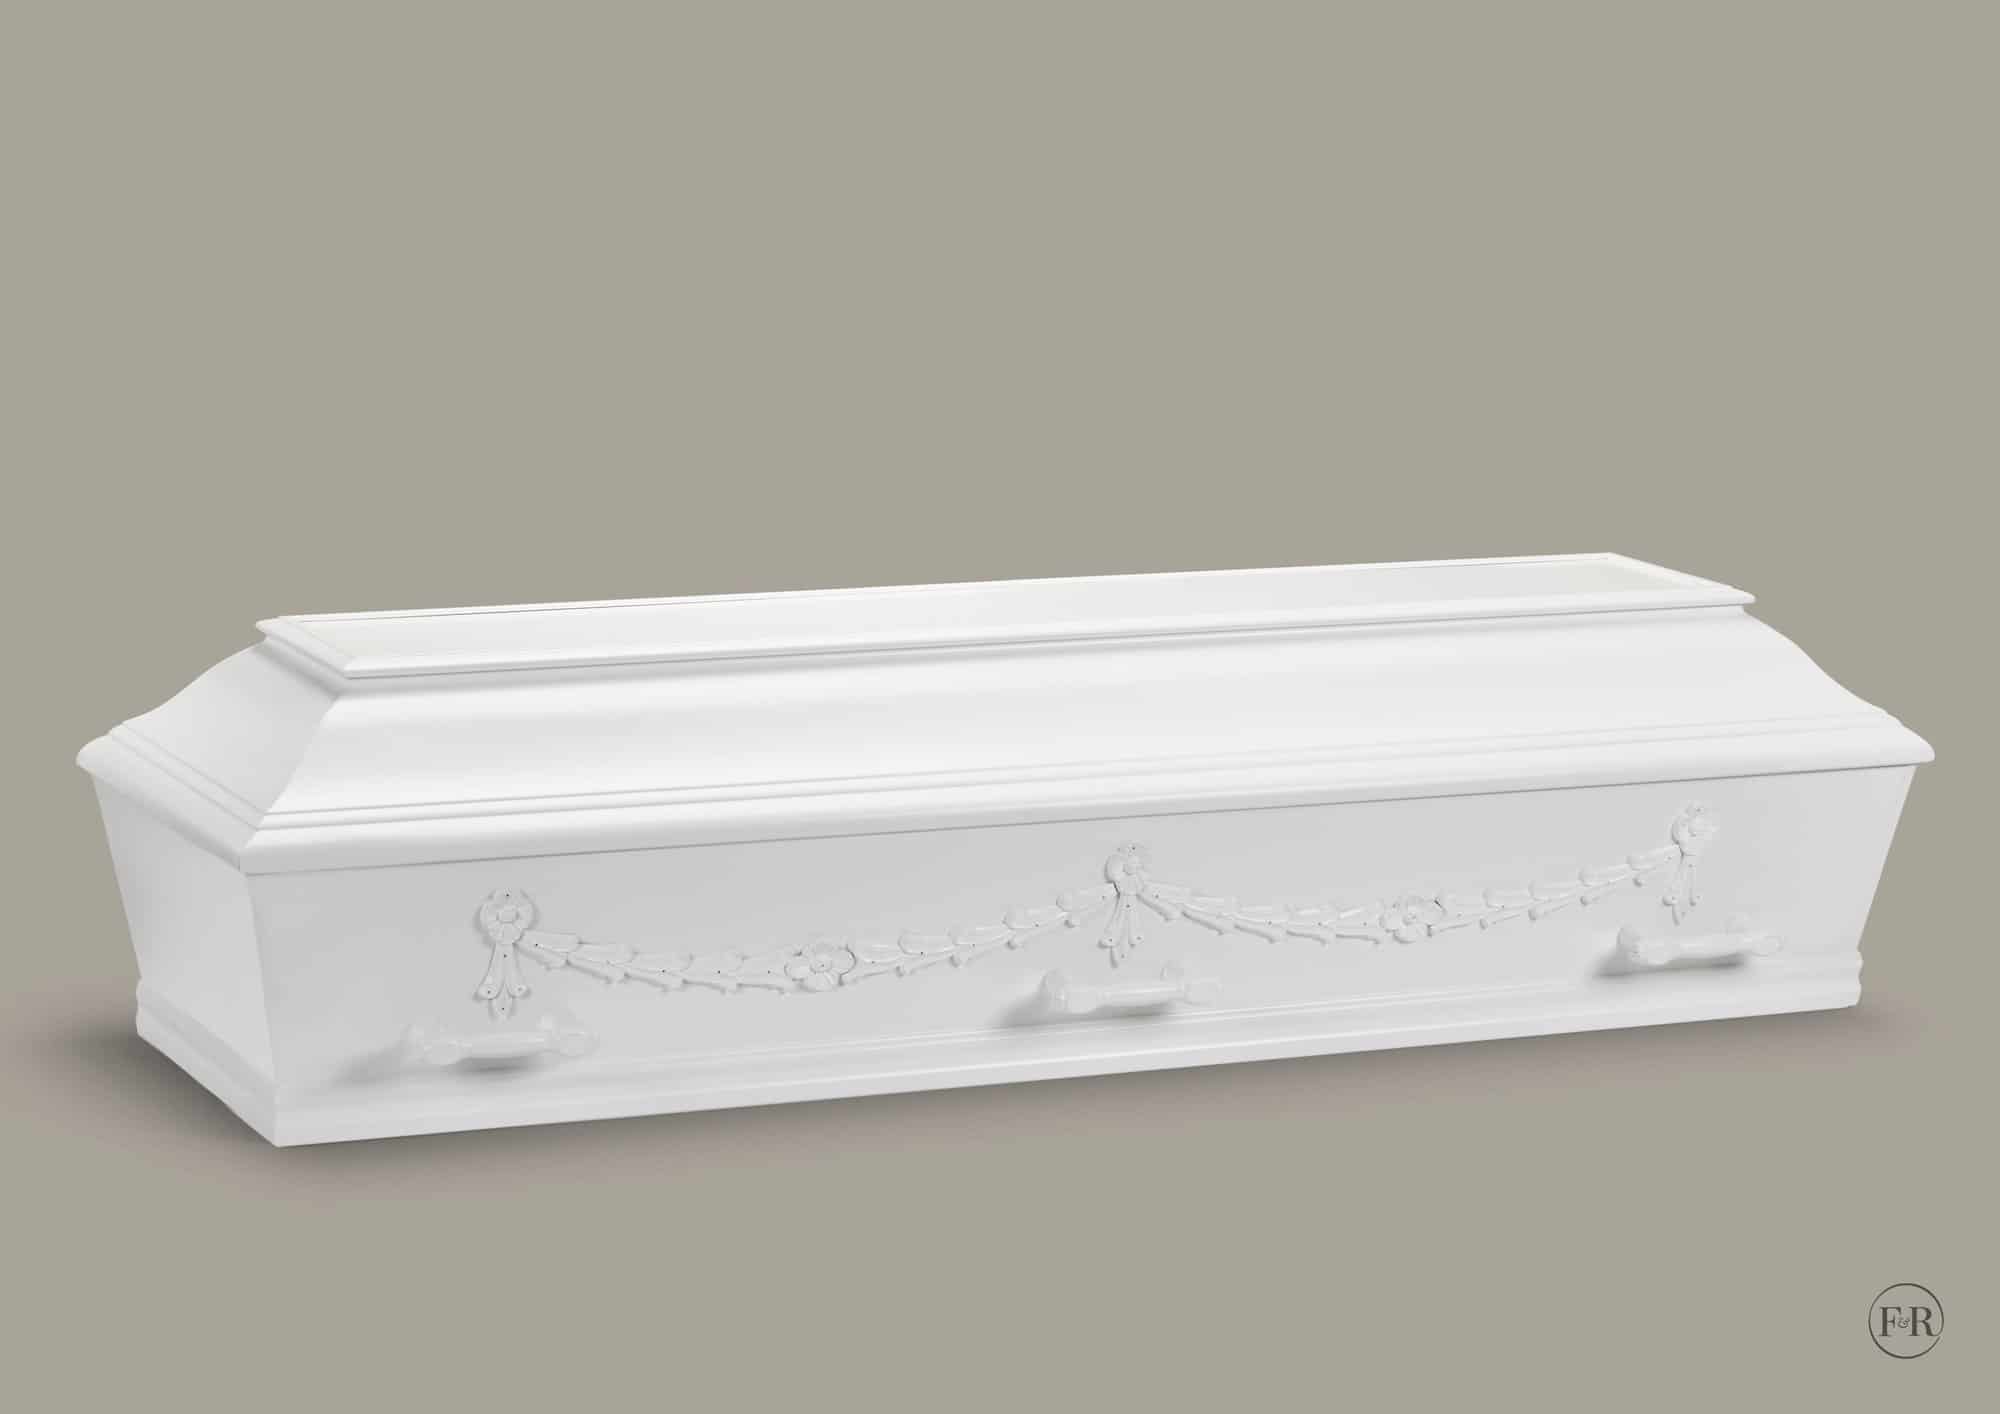 Begravelses kiste guirlande inkl polstring, pude og dyne